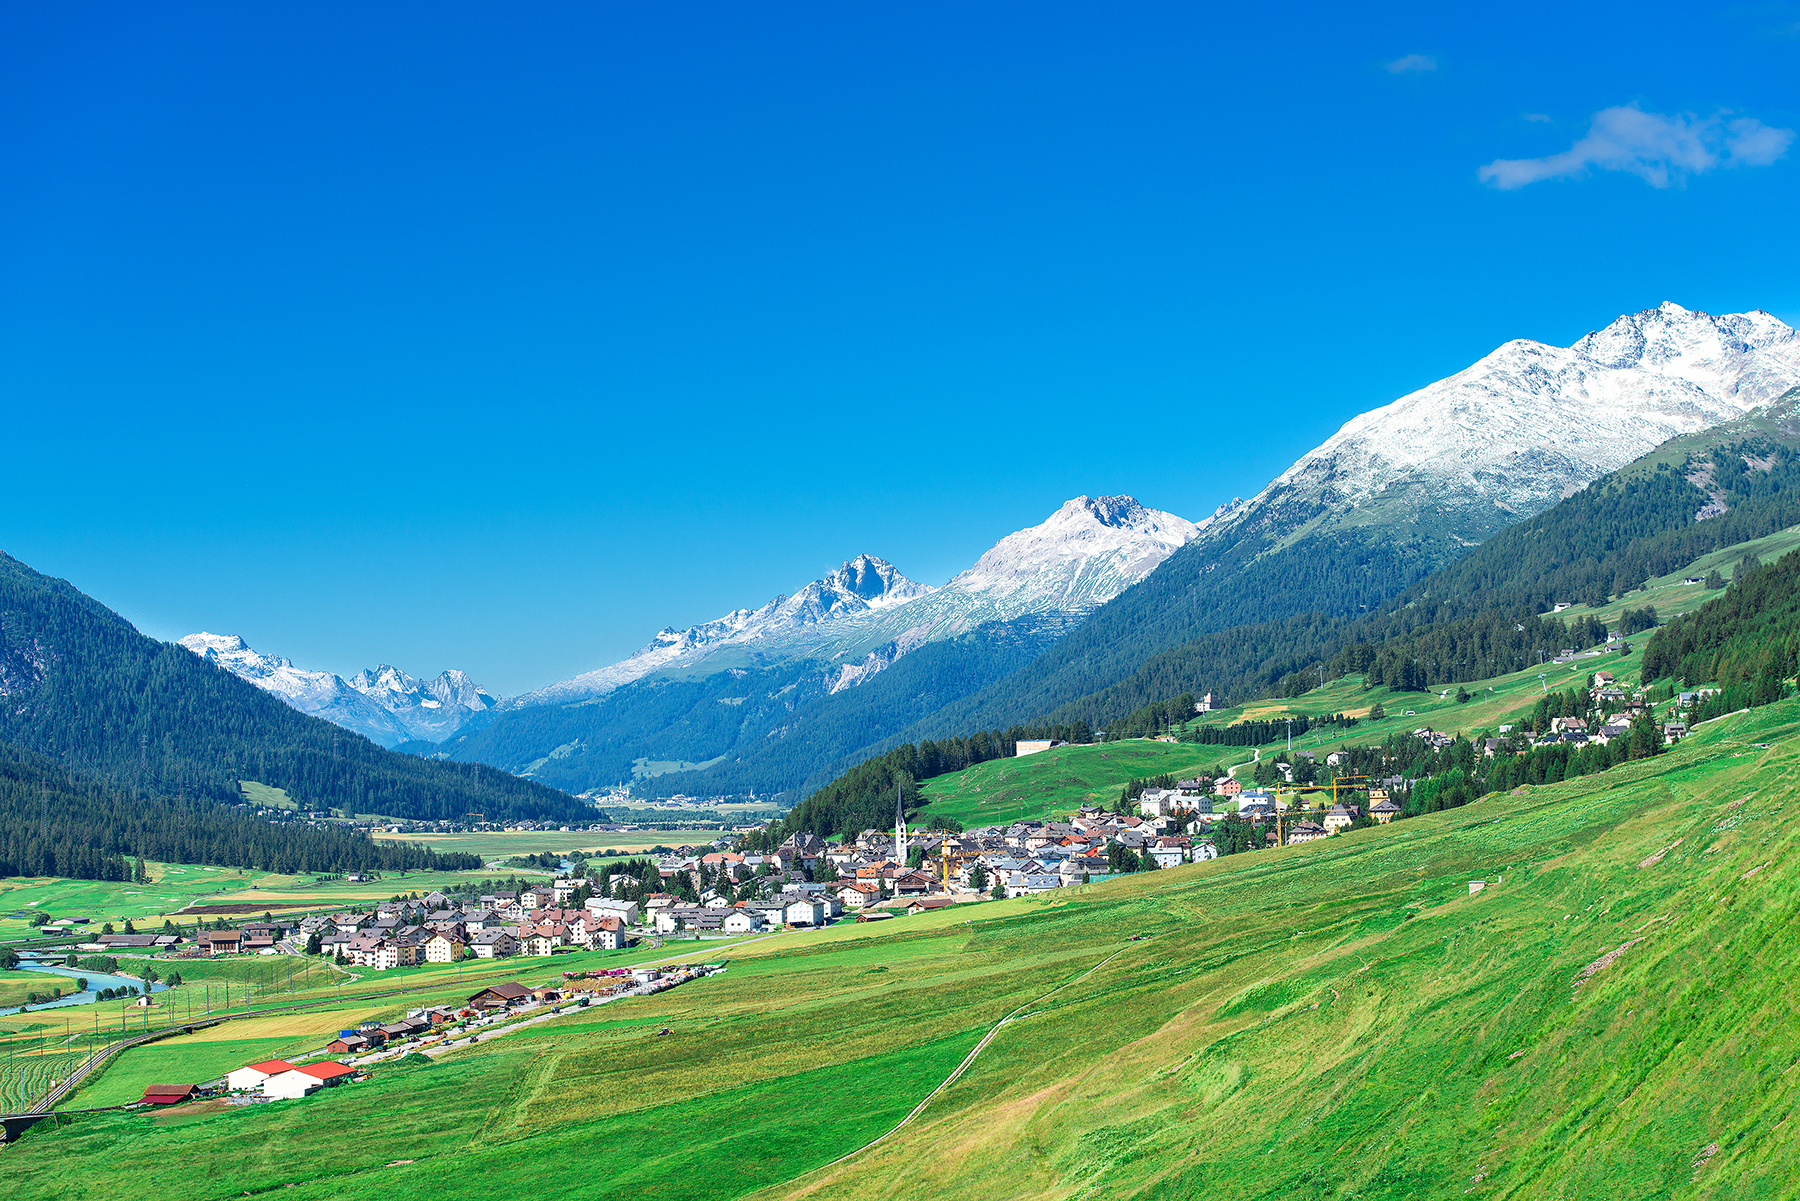 Swiss Alps scene